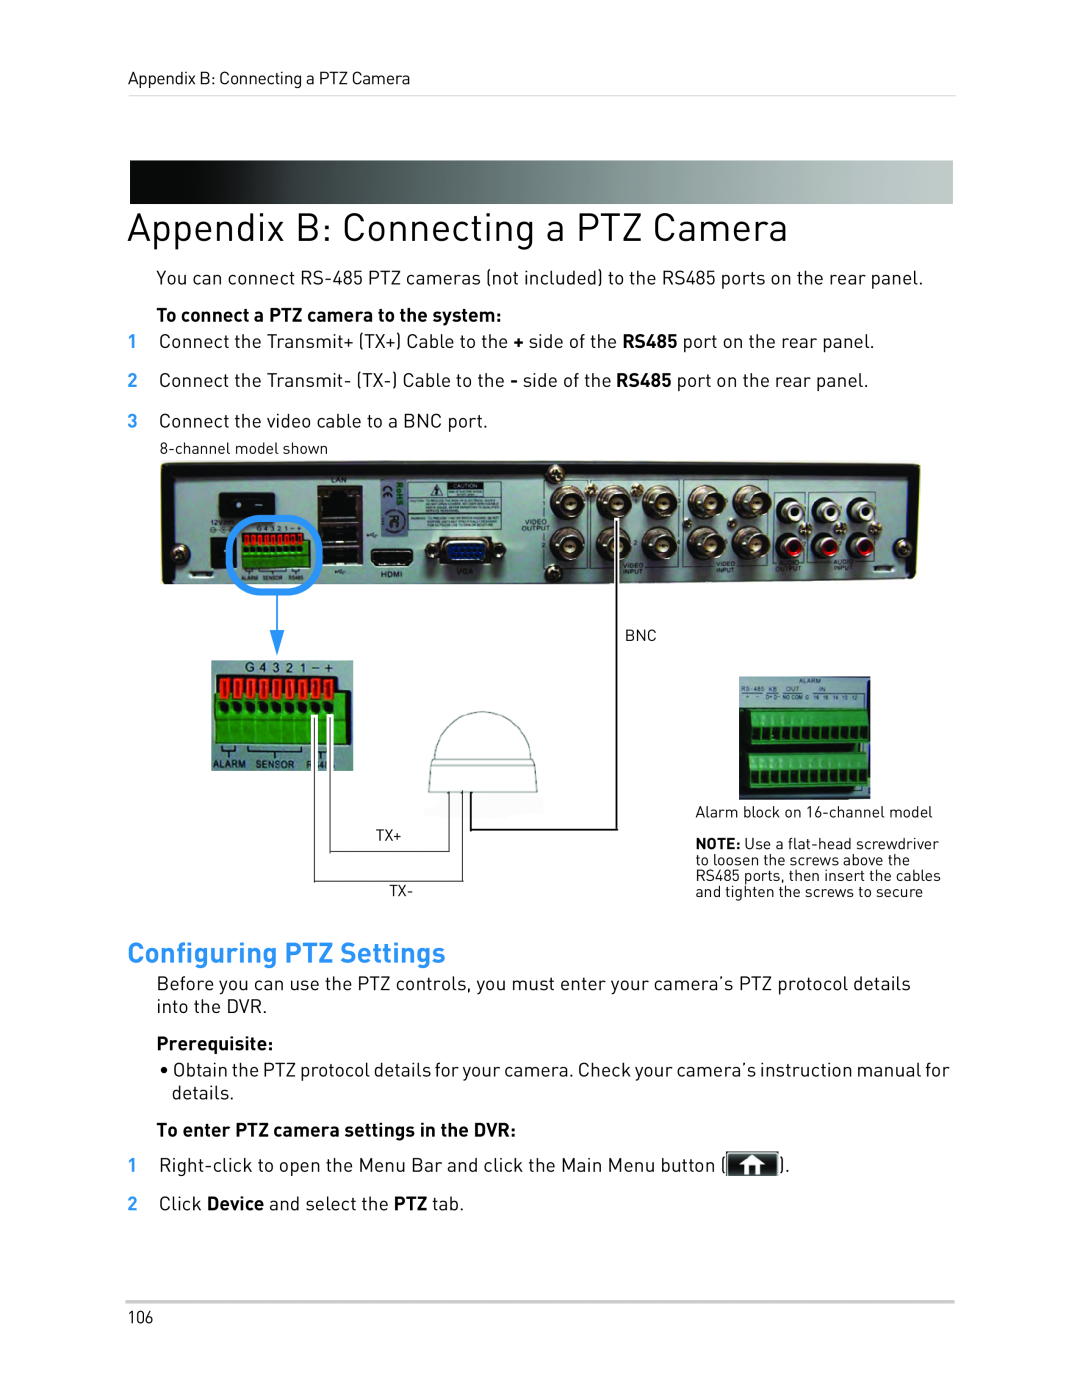 LOREX Technology LH1361001C8B, LH130 Appendix B: Connecting a PTZ Camera, Configuring PTZ Settings, Prerequisite 